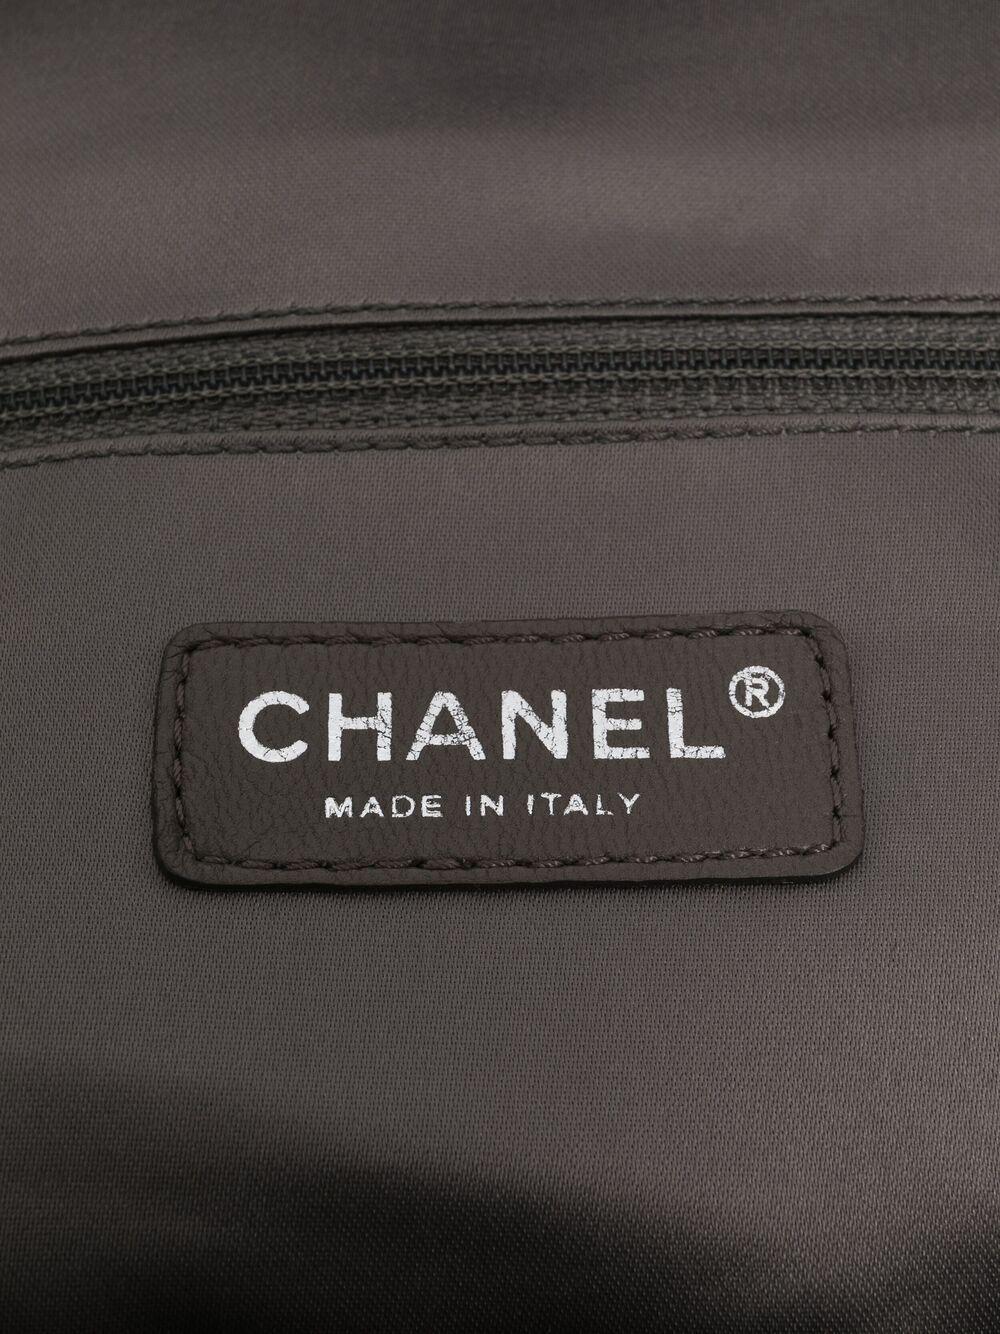 2008 Chanel Black Perforated Leather Shoulder Tote Bag 1